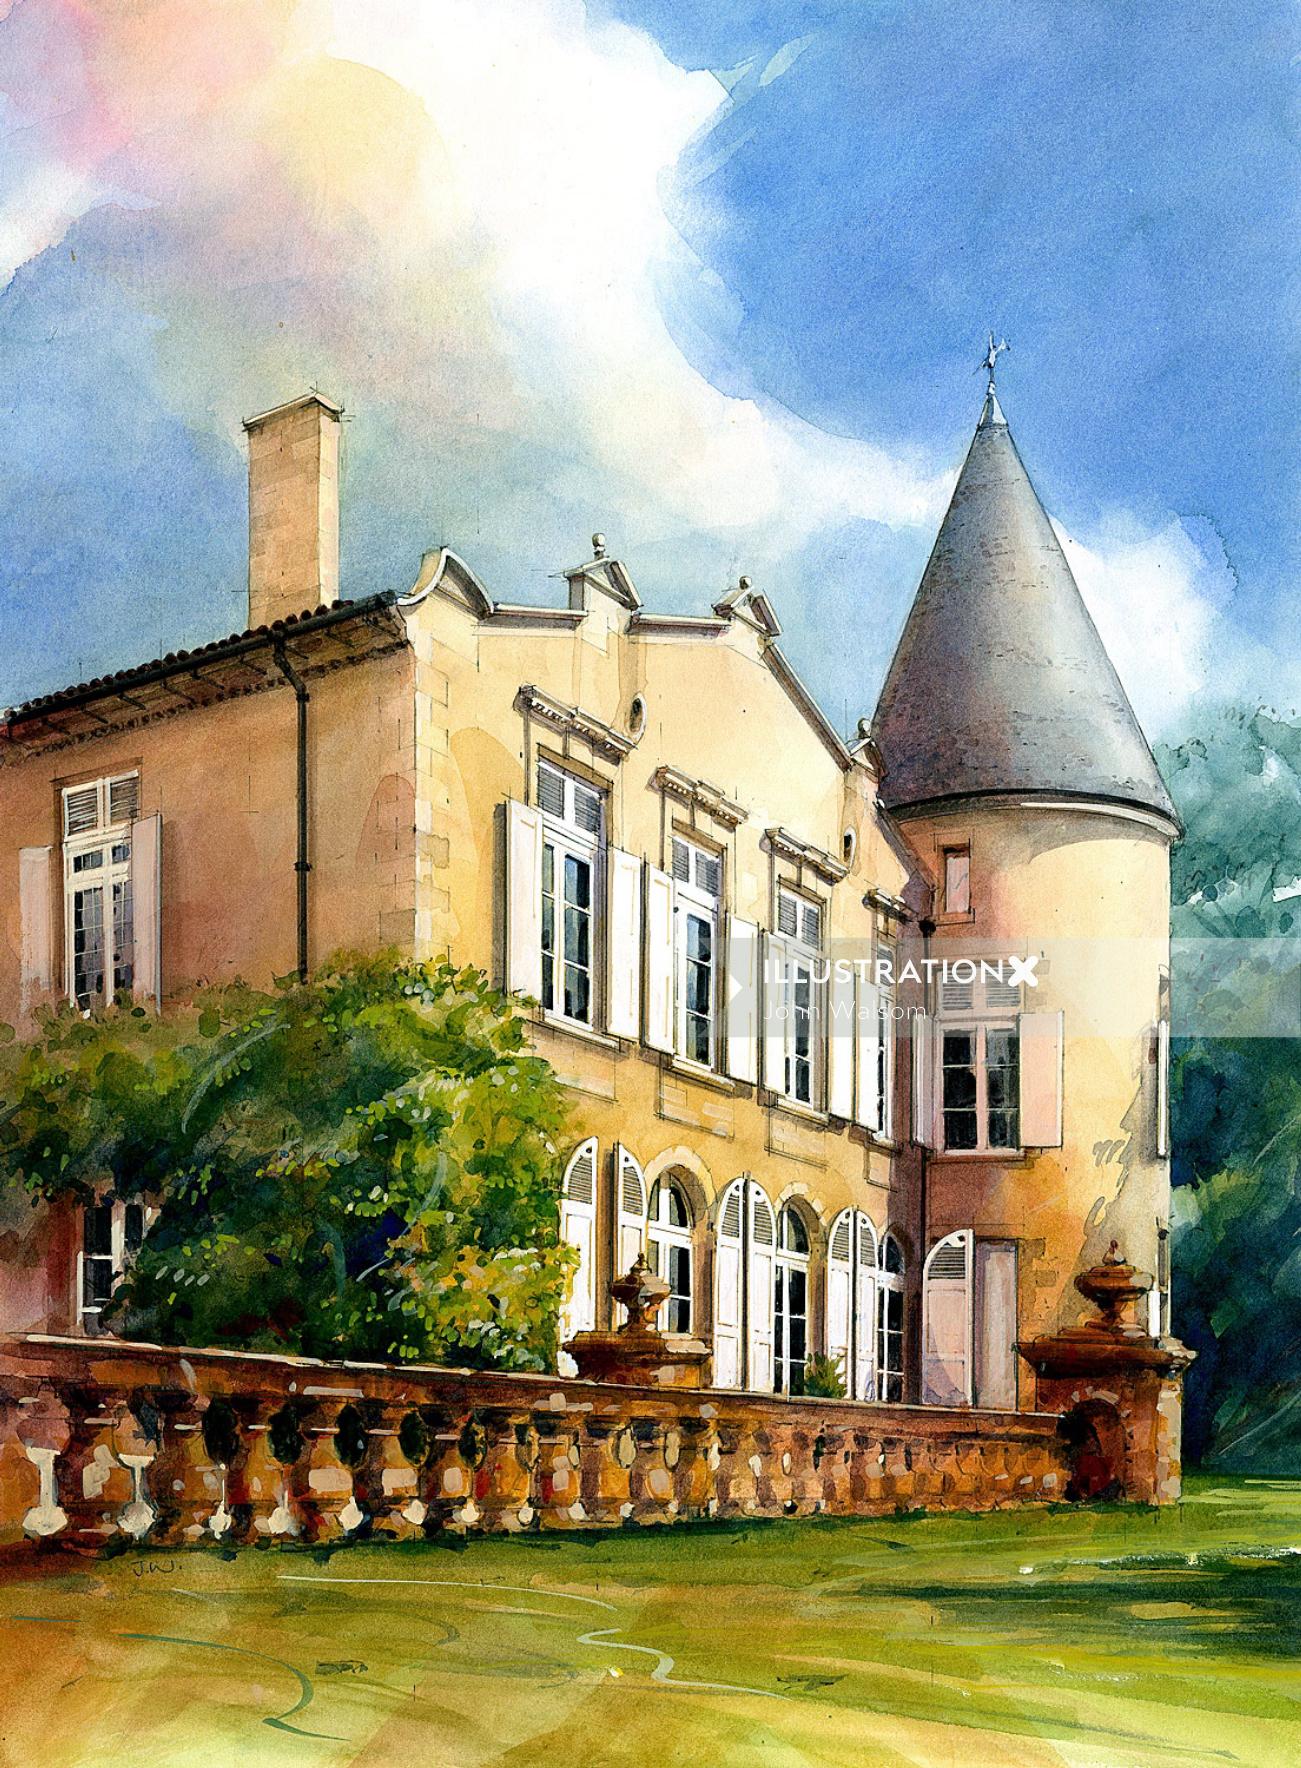 Chateau Lafite illustration